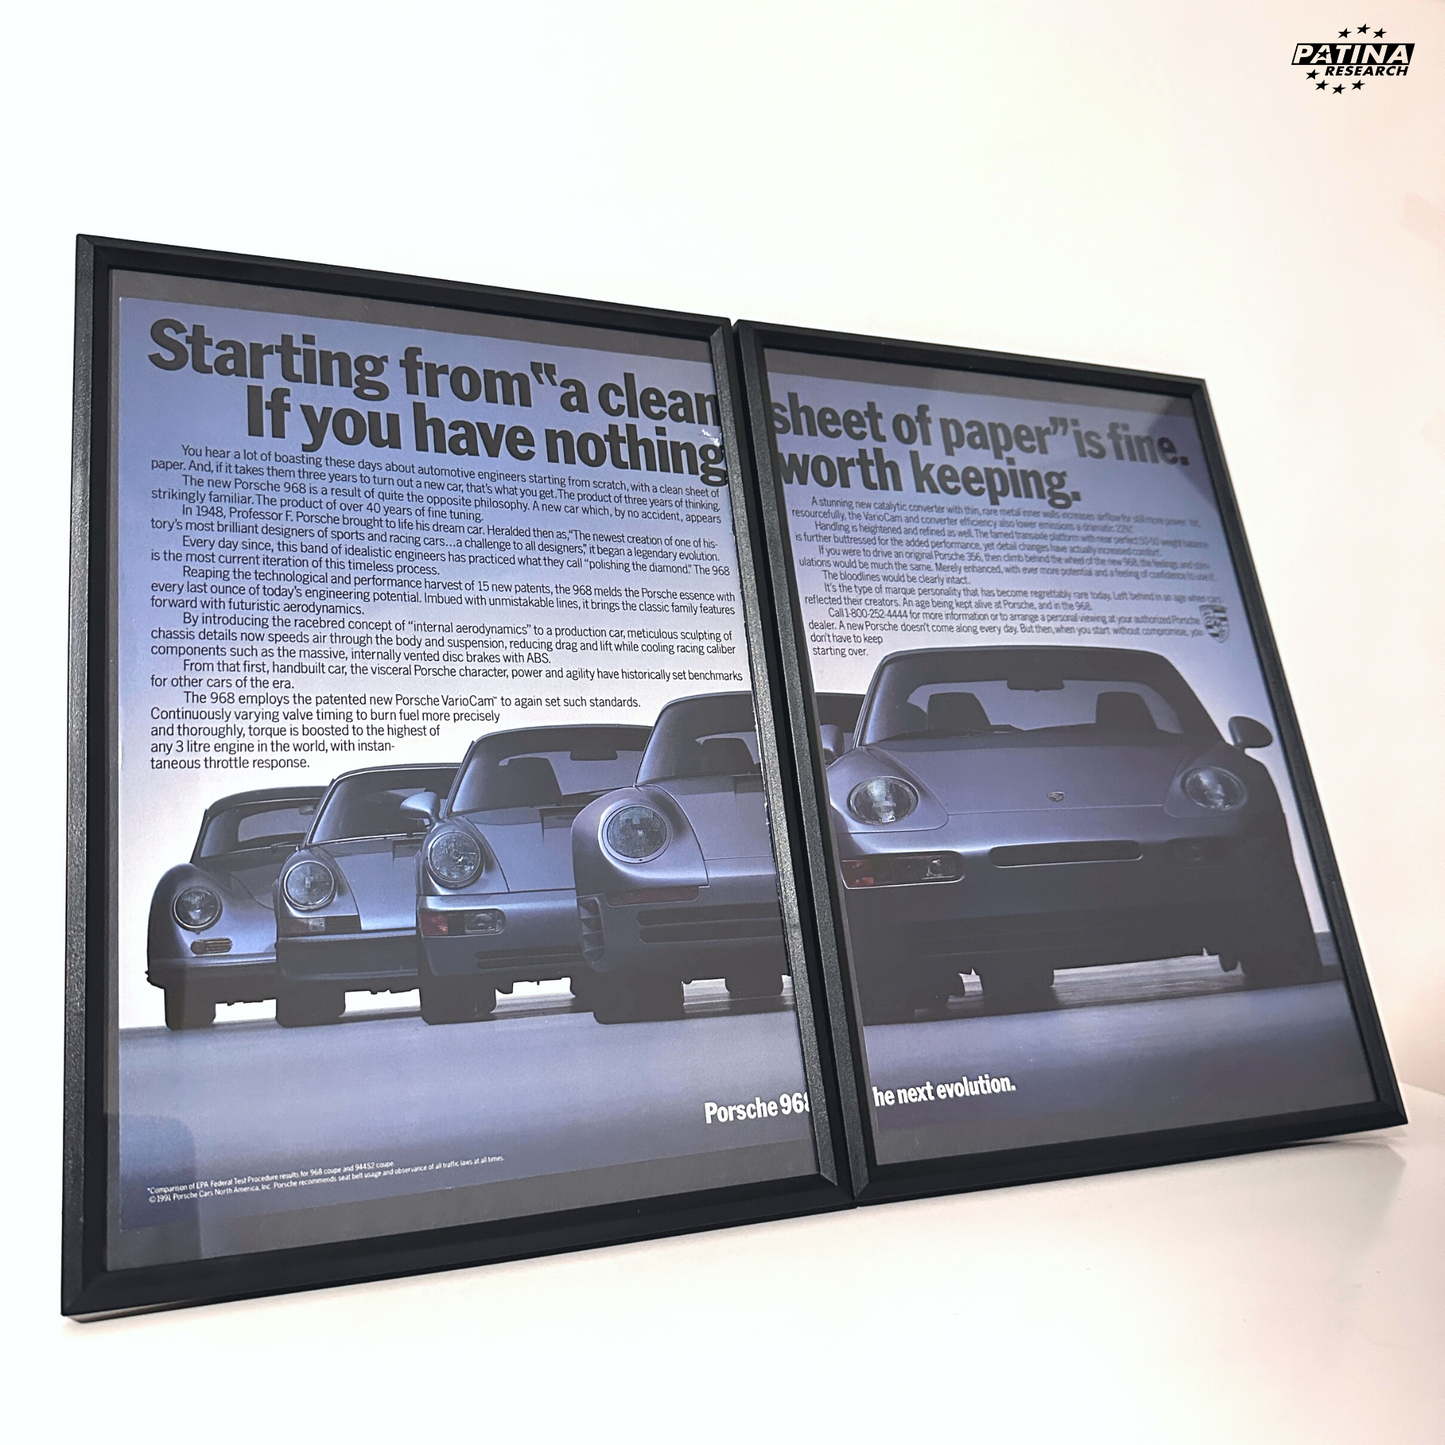 Porsche 968 next evolution framed ad